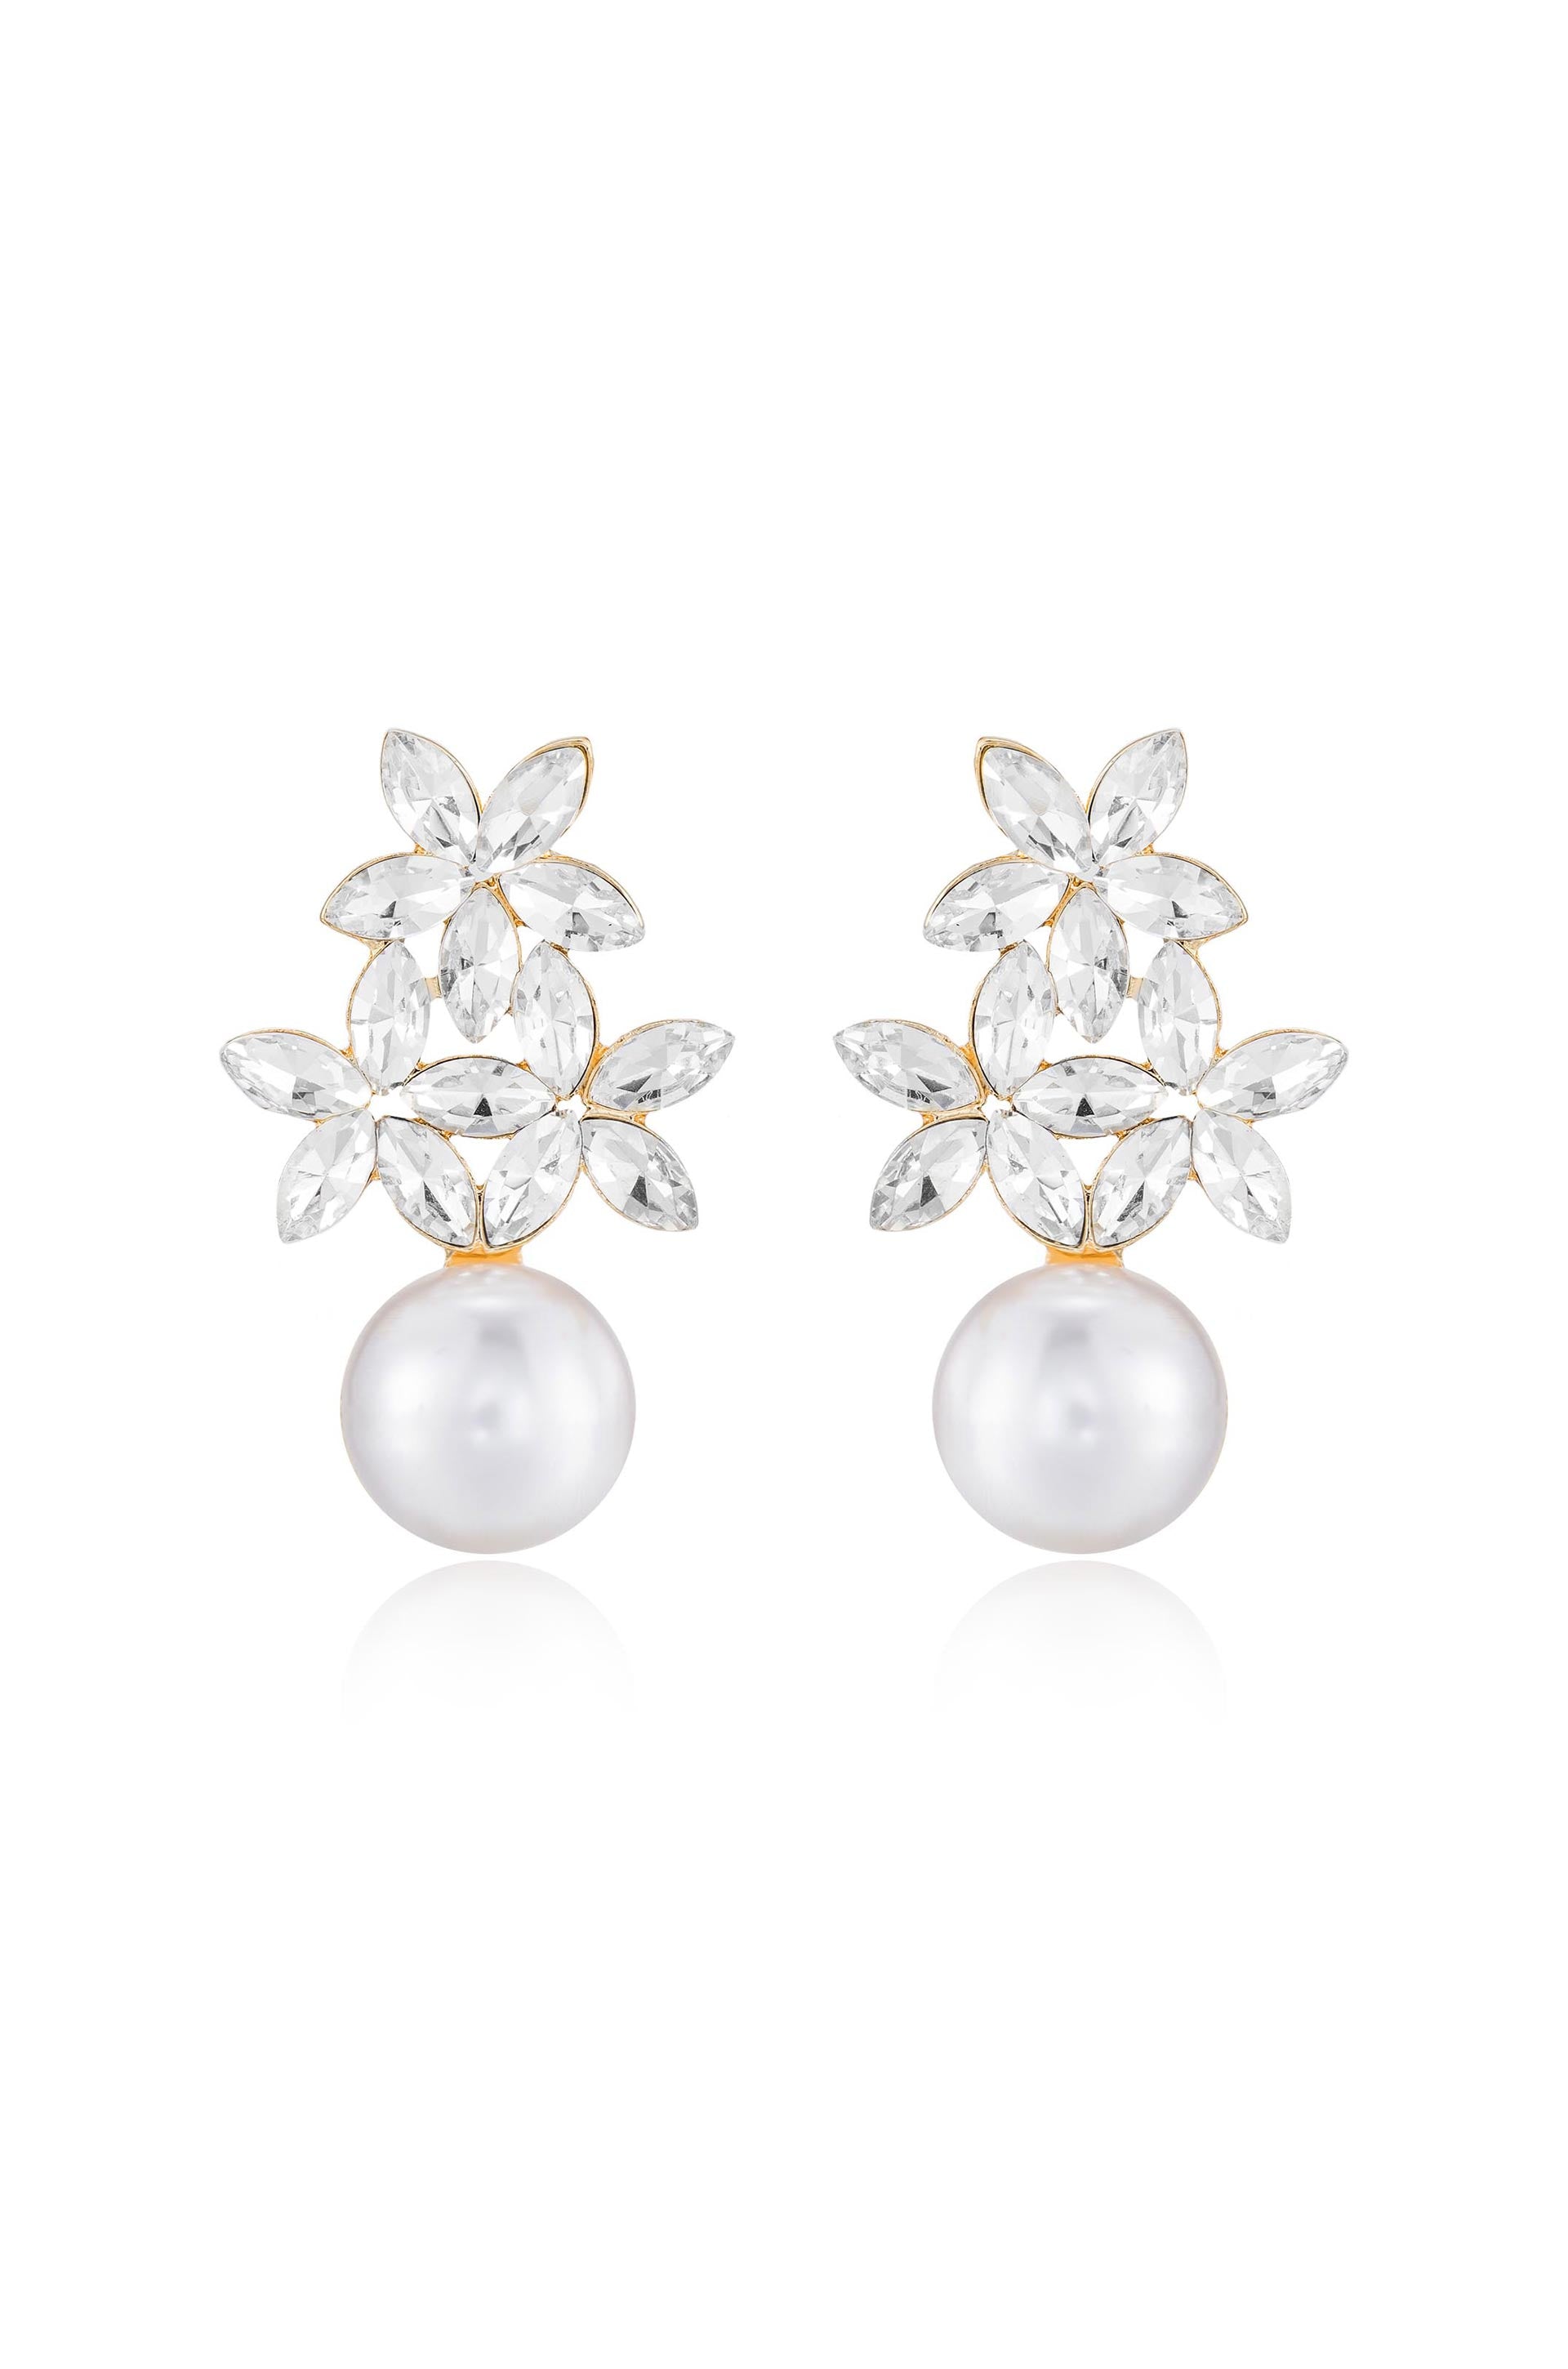 Louison Pearl Pierced Earrings, White, Rhodium plated